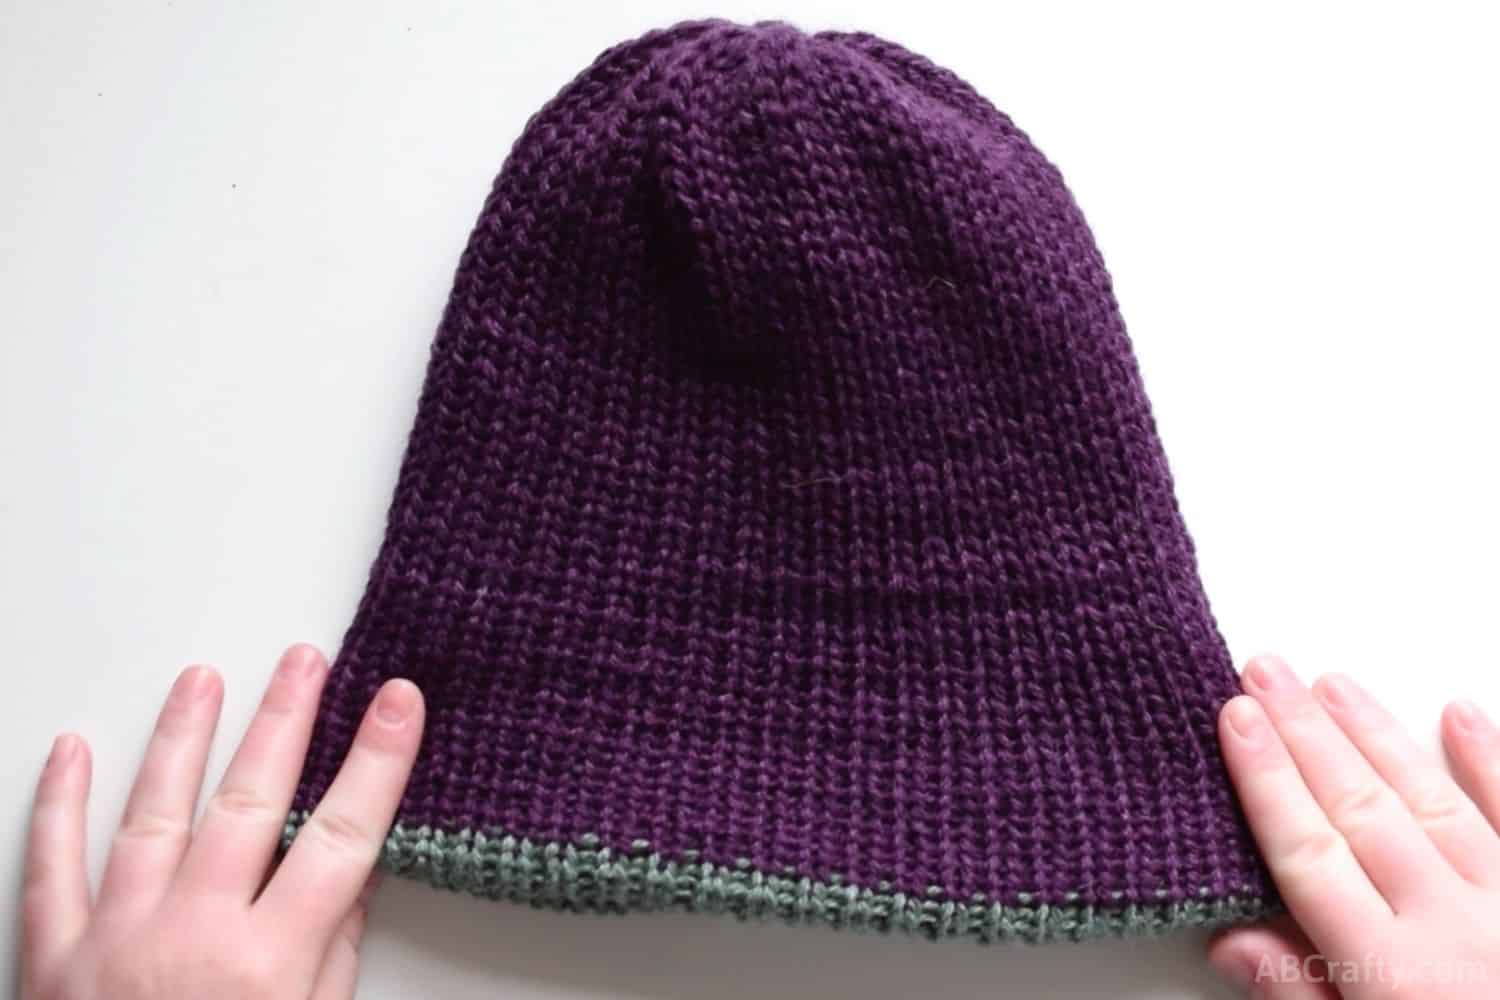 Easiest Knitting Machine Beanie Hat Pattern (Sentro, Jamit, or